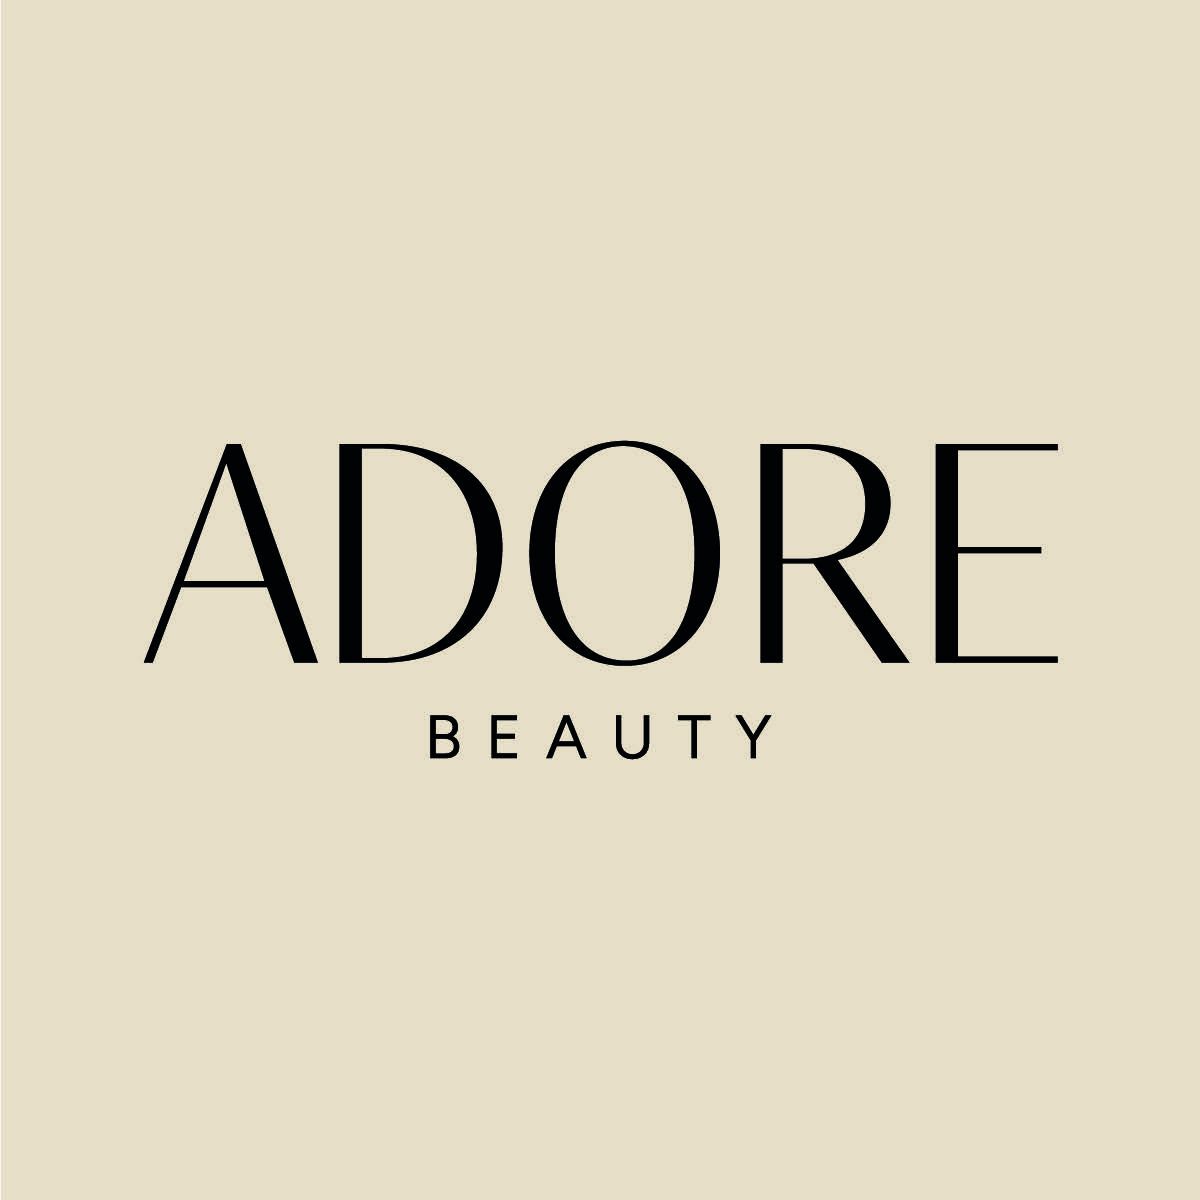 ADORE Beauty SPA, Jagiellońska 6, 6/2, 40-035, Katowice